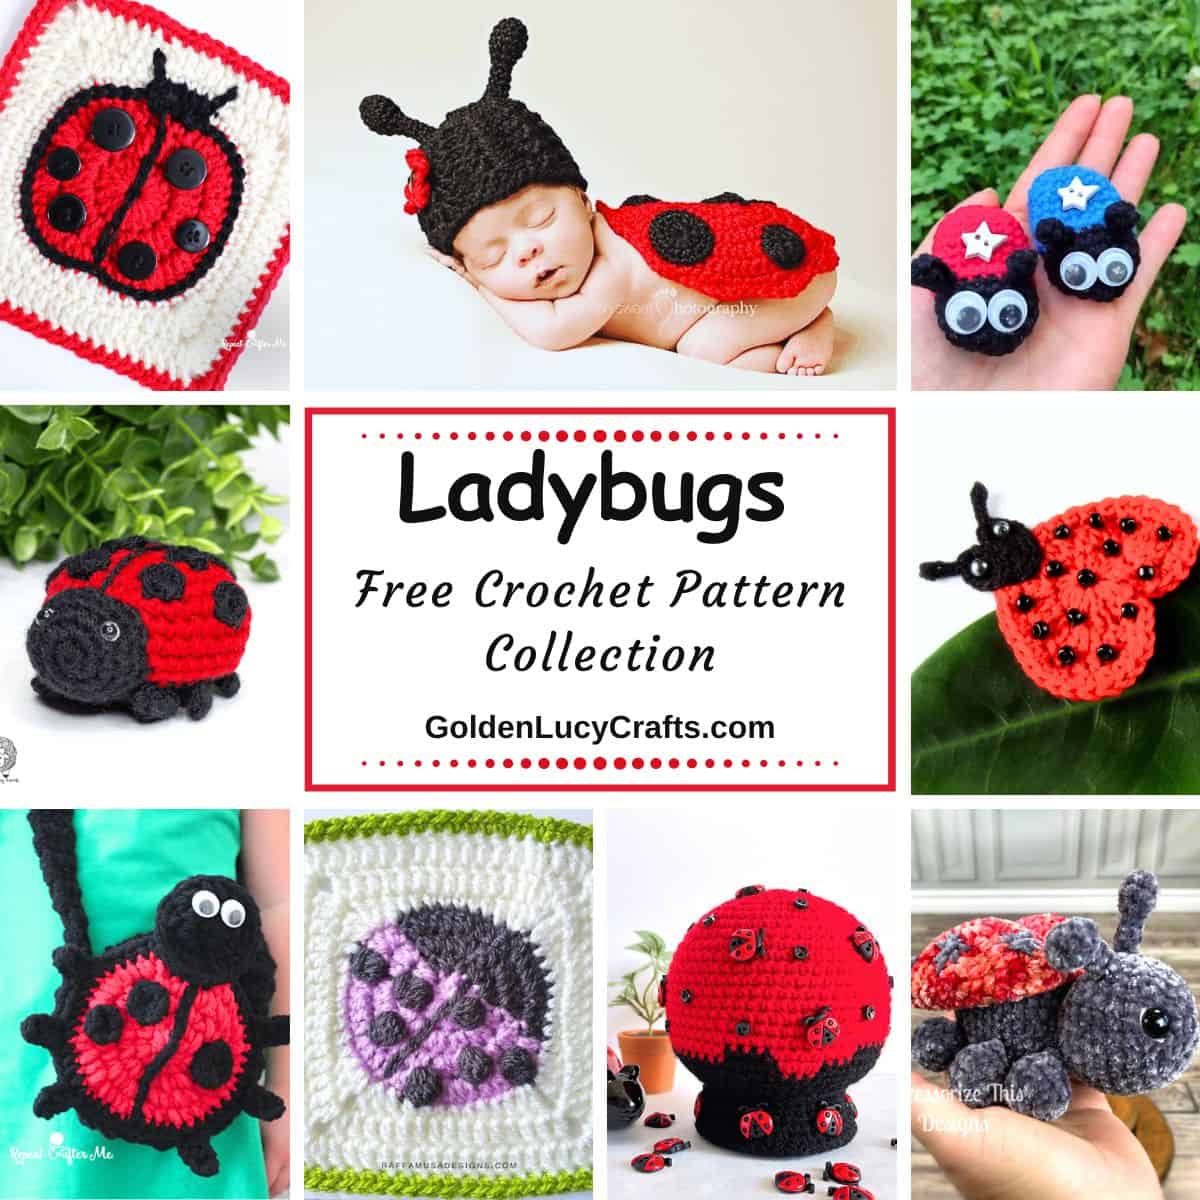 Photo collage of ladybug themed crochet items.